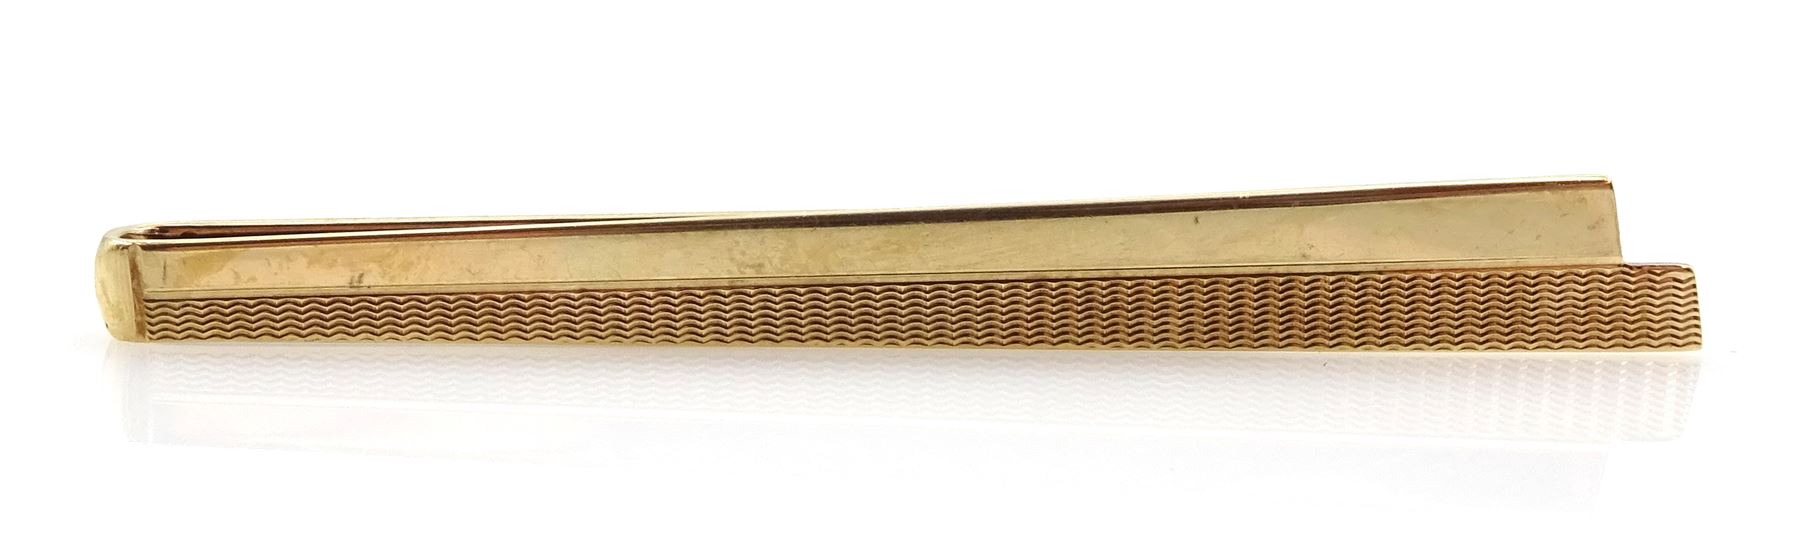 9ct gold tie clip hallmarked - Image 3 of 3